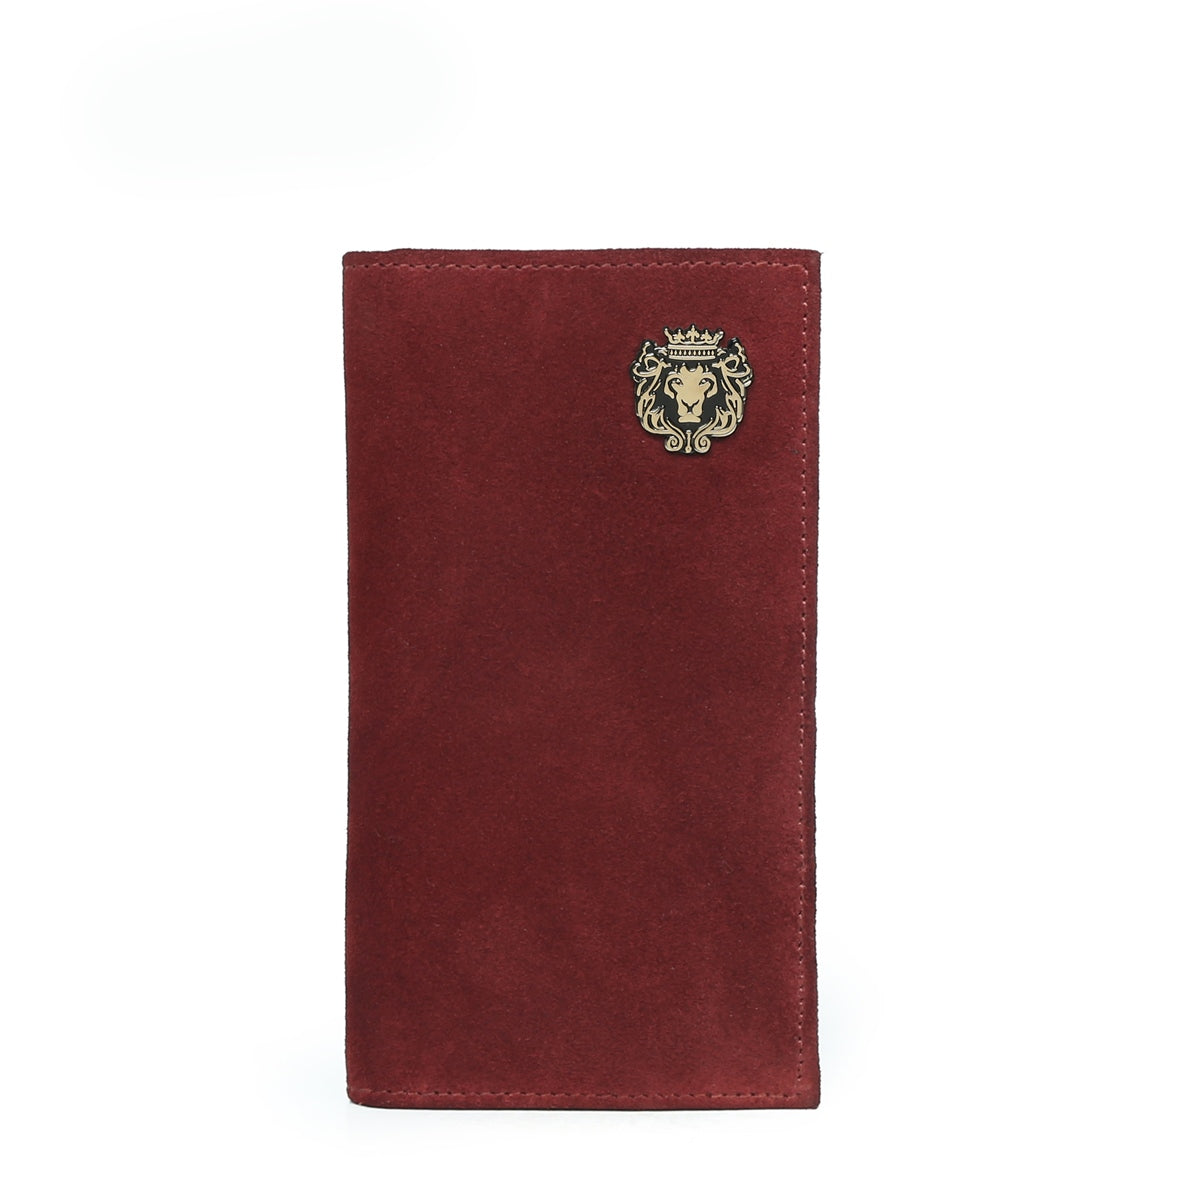 Hand Clutch/Wallet In Red Suede For Women By Brune & Bareskin